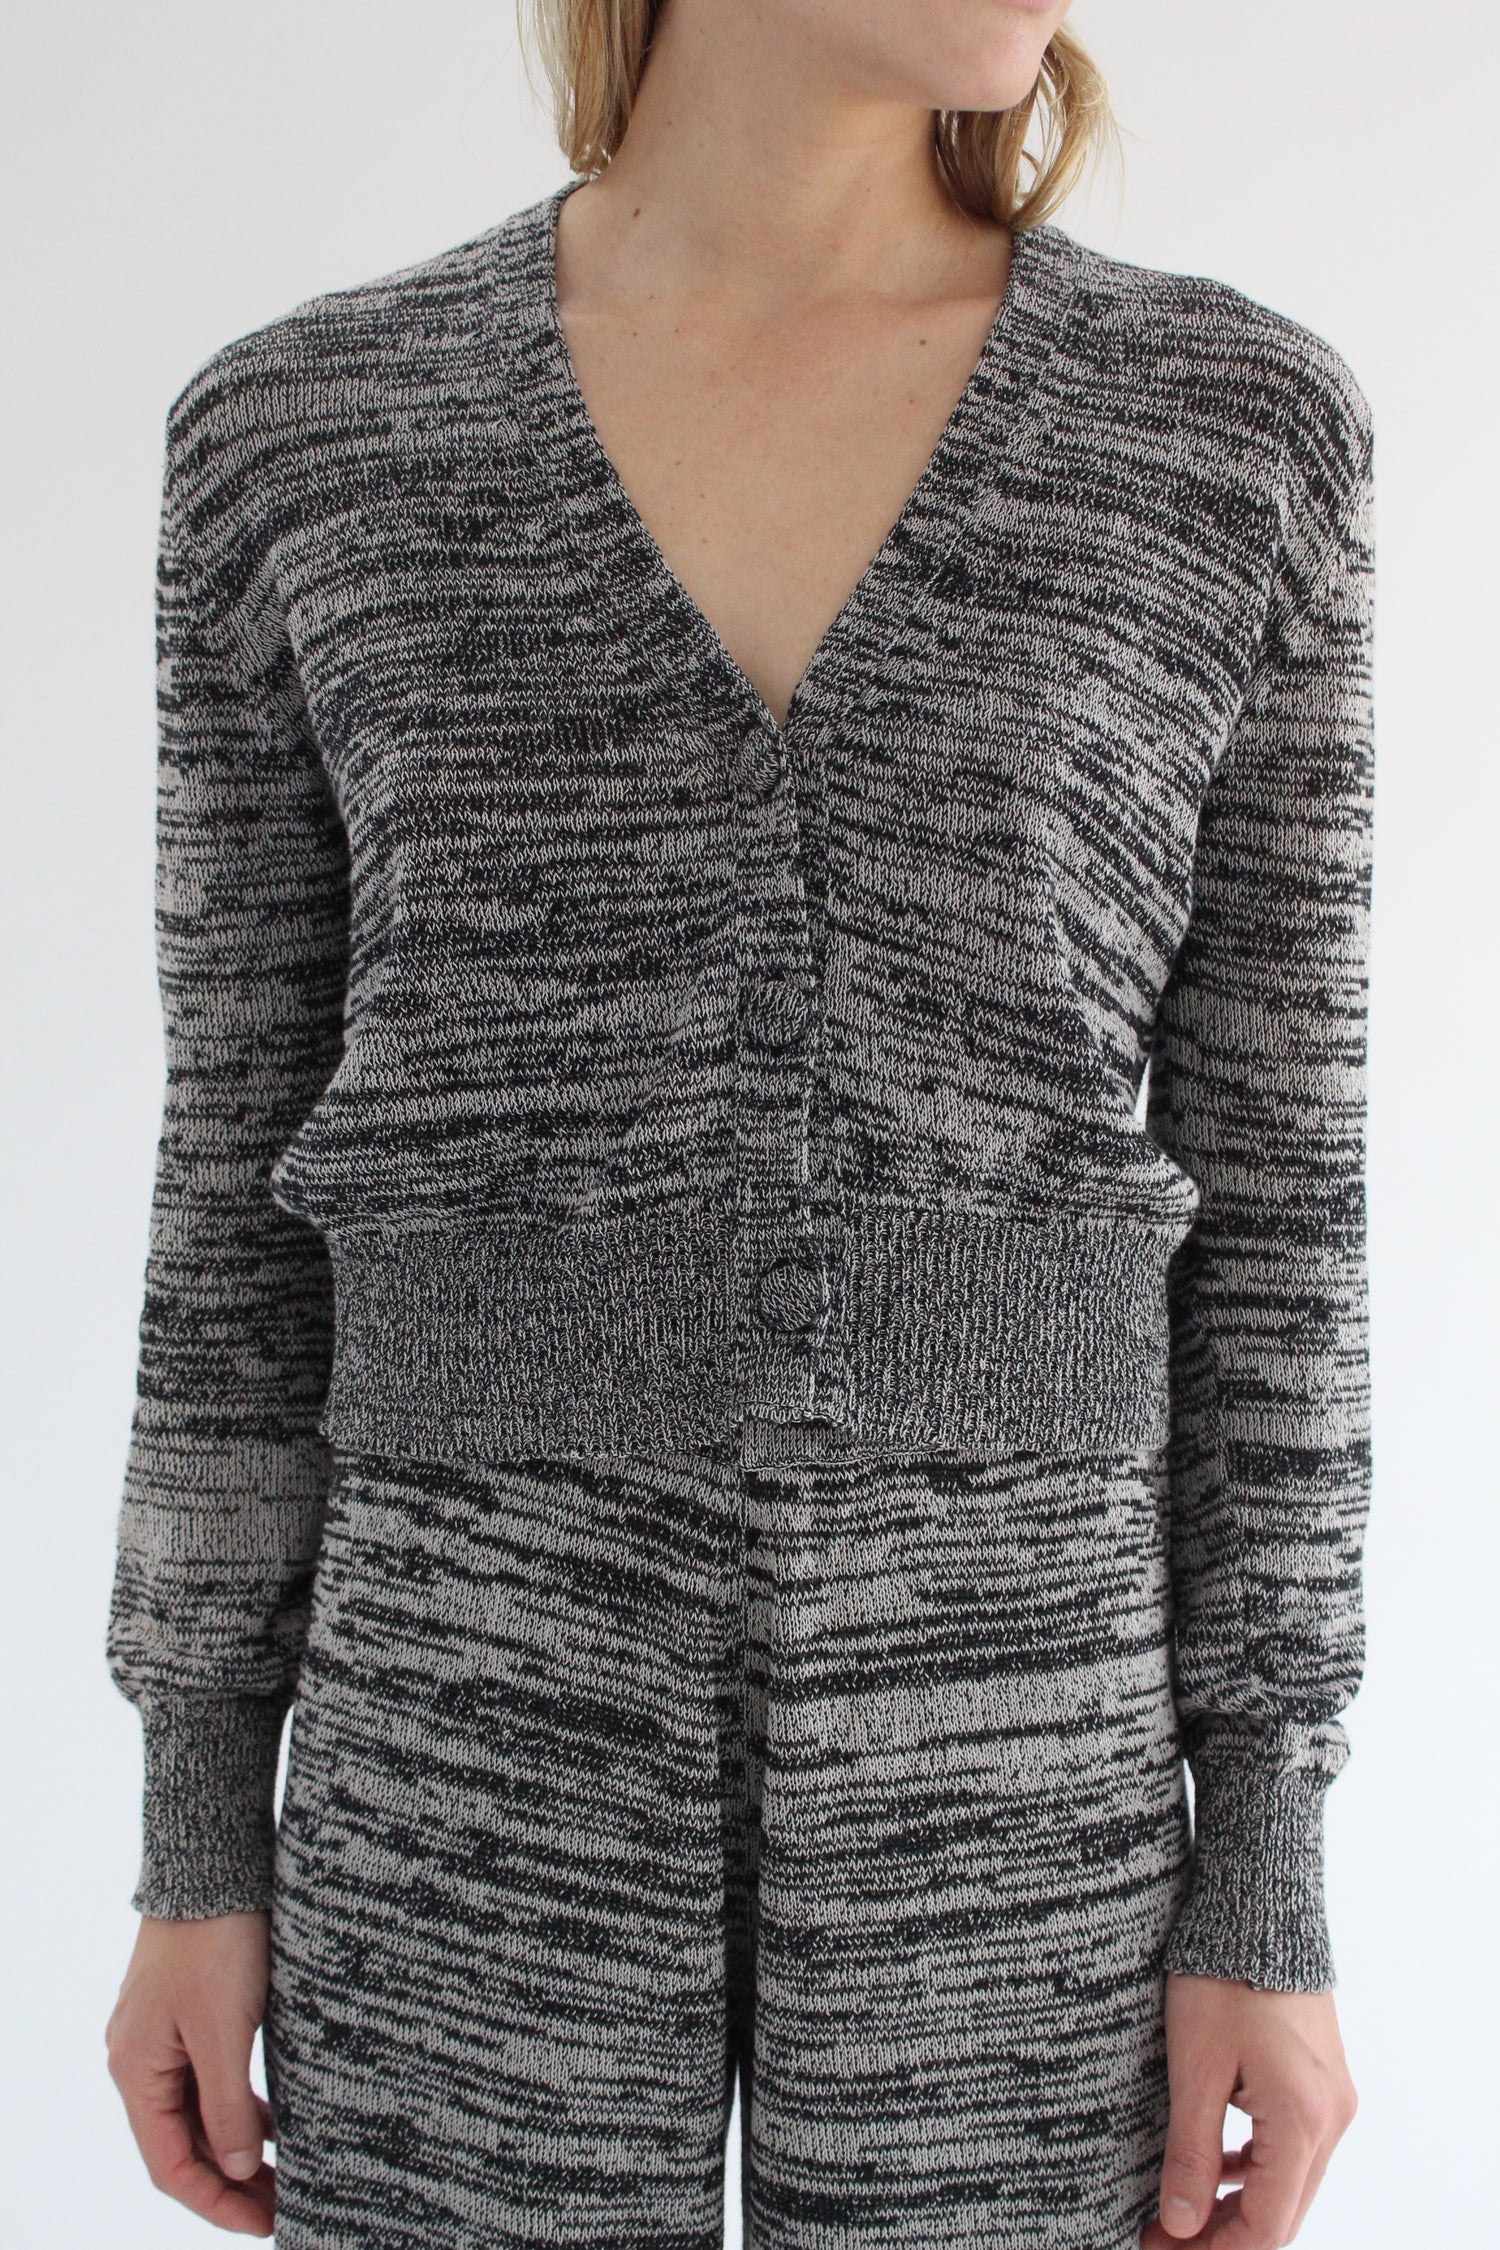 Beklina Cotton Knit Cardigan Black/Grey